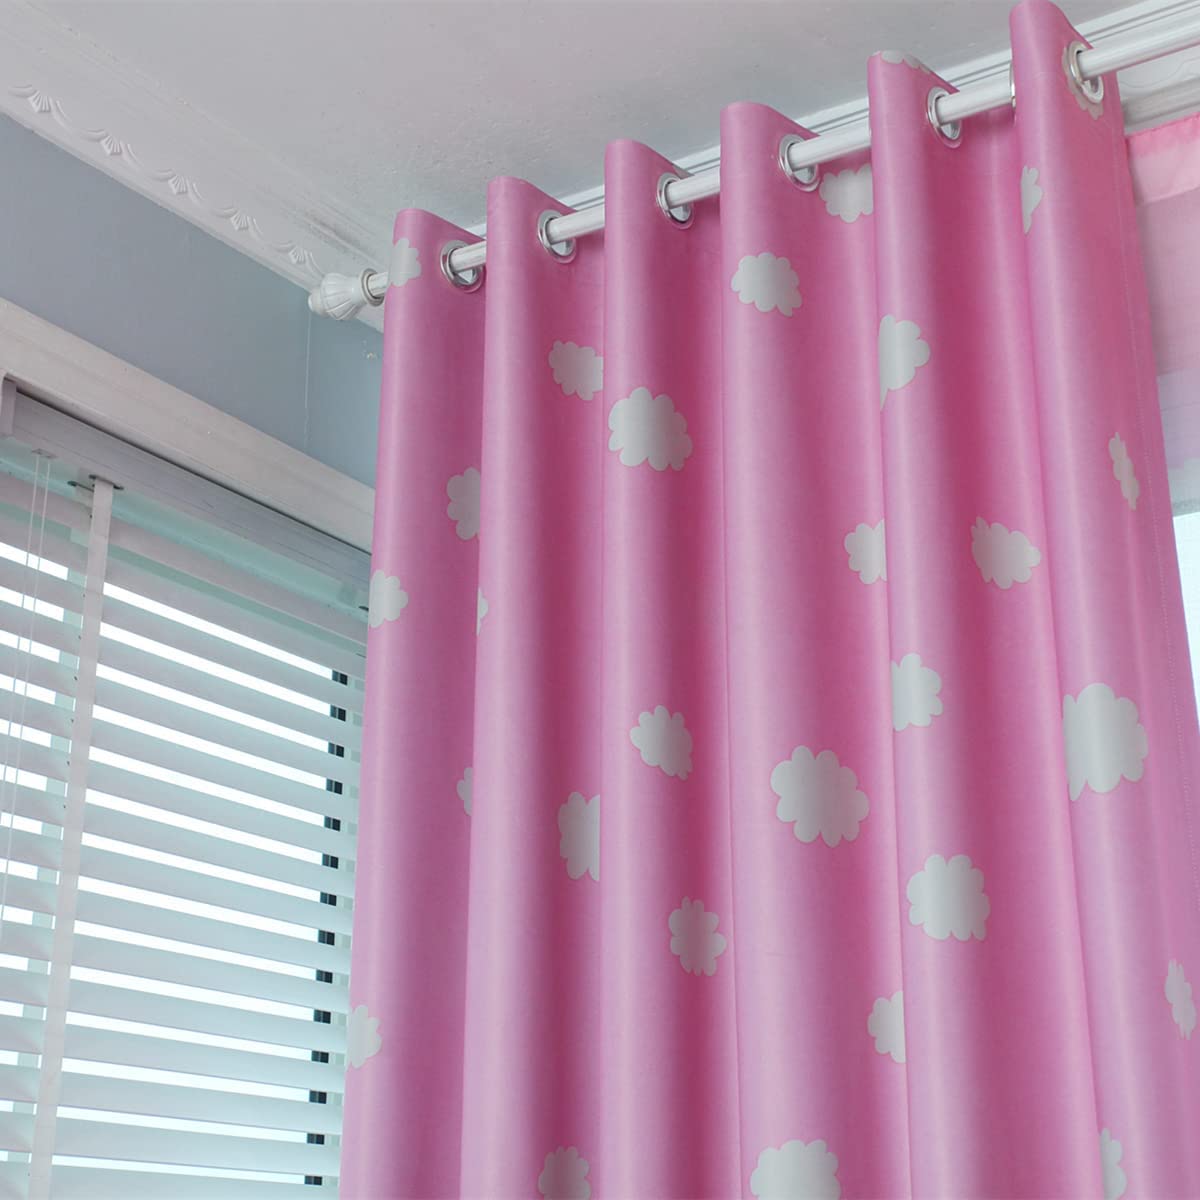 Cute Cloud Pattern Curtain Thermal Insulated Room Darkening Grommet Top,Set of 2